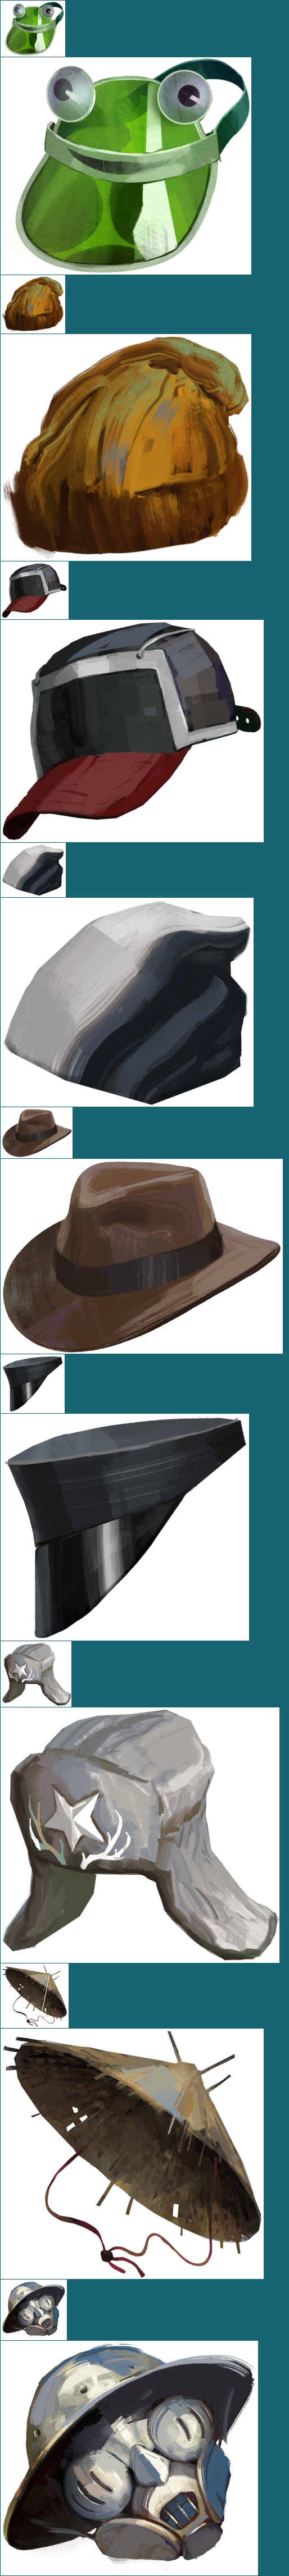 Disco Elysium - Clothing (Hats)